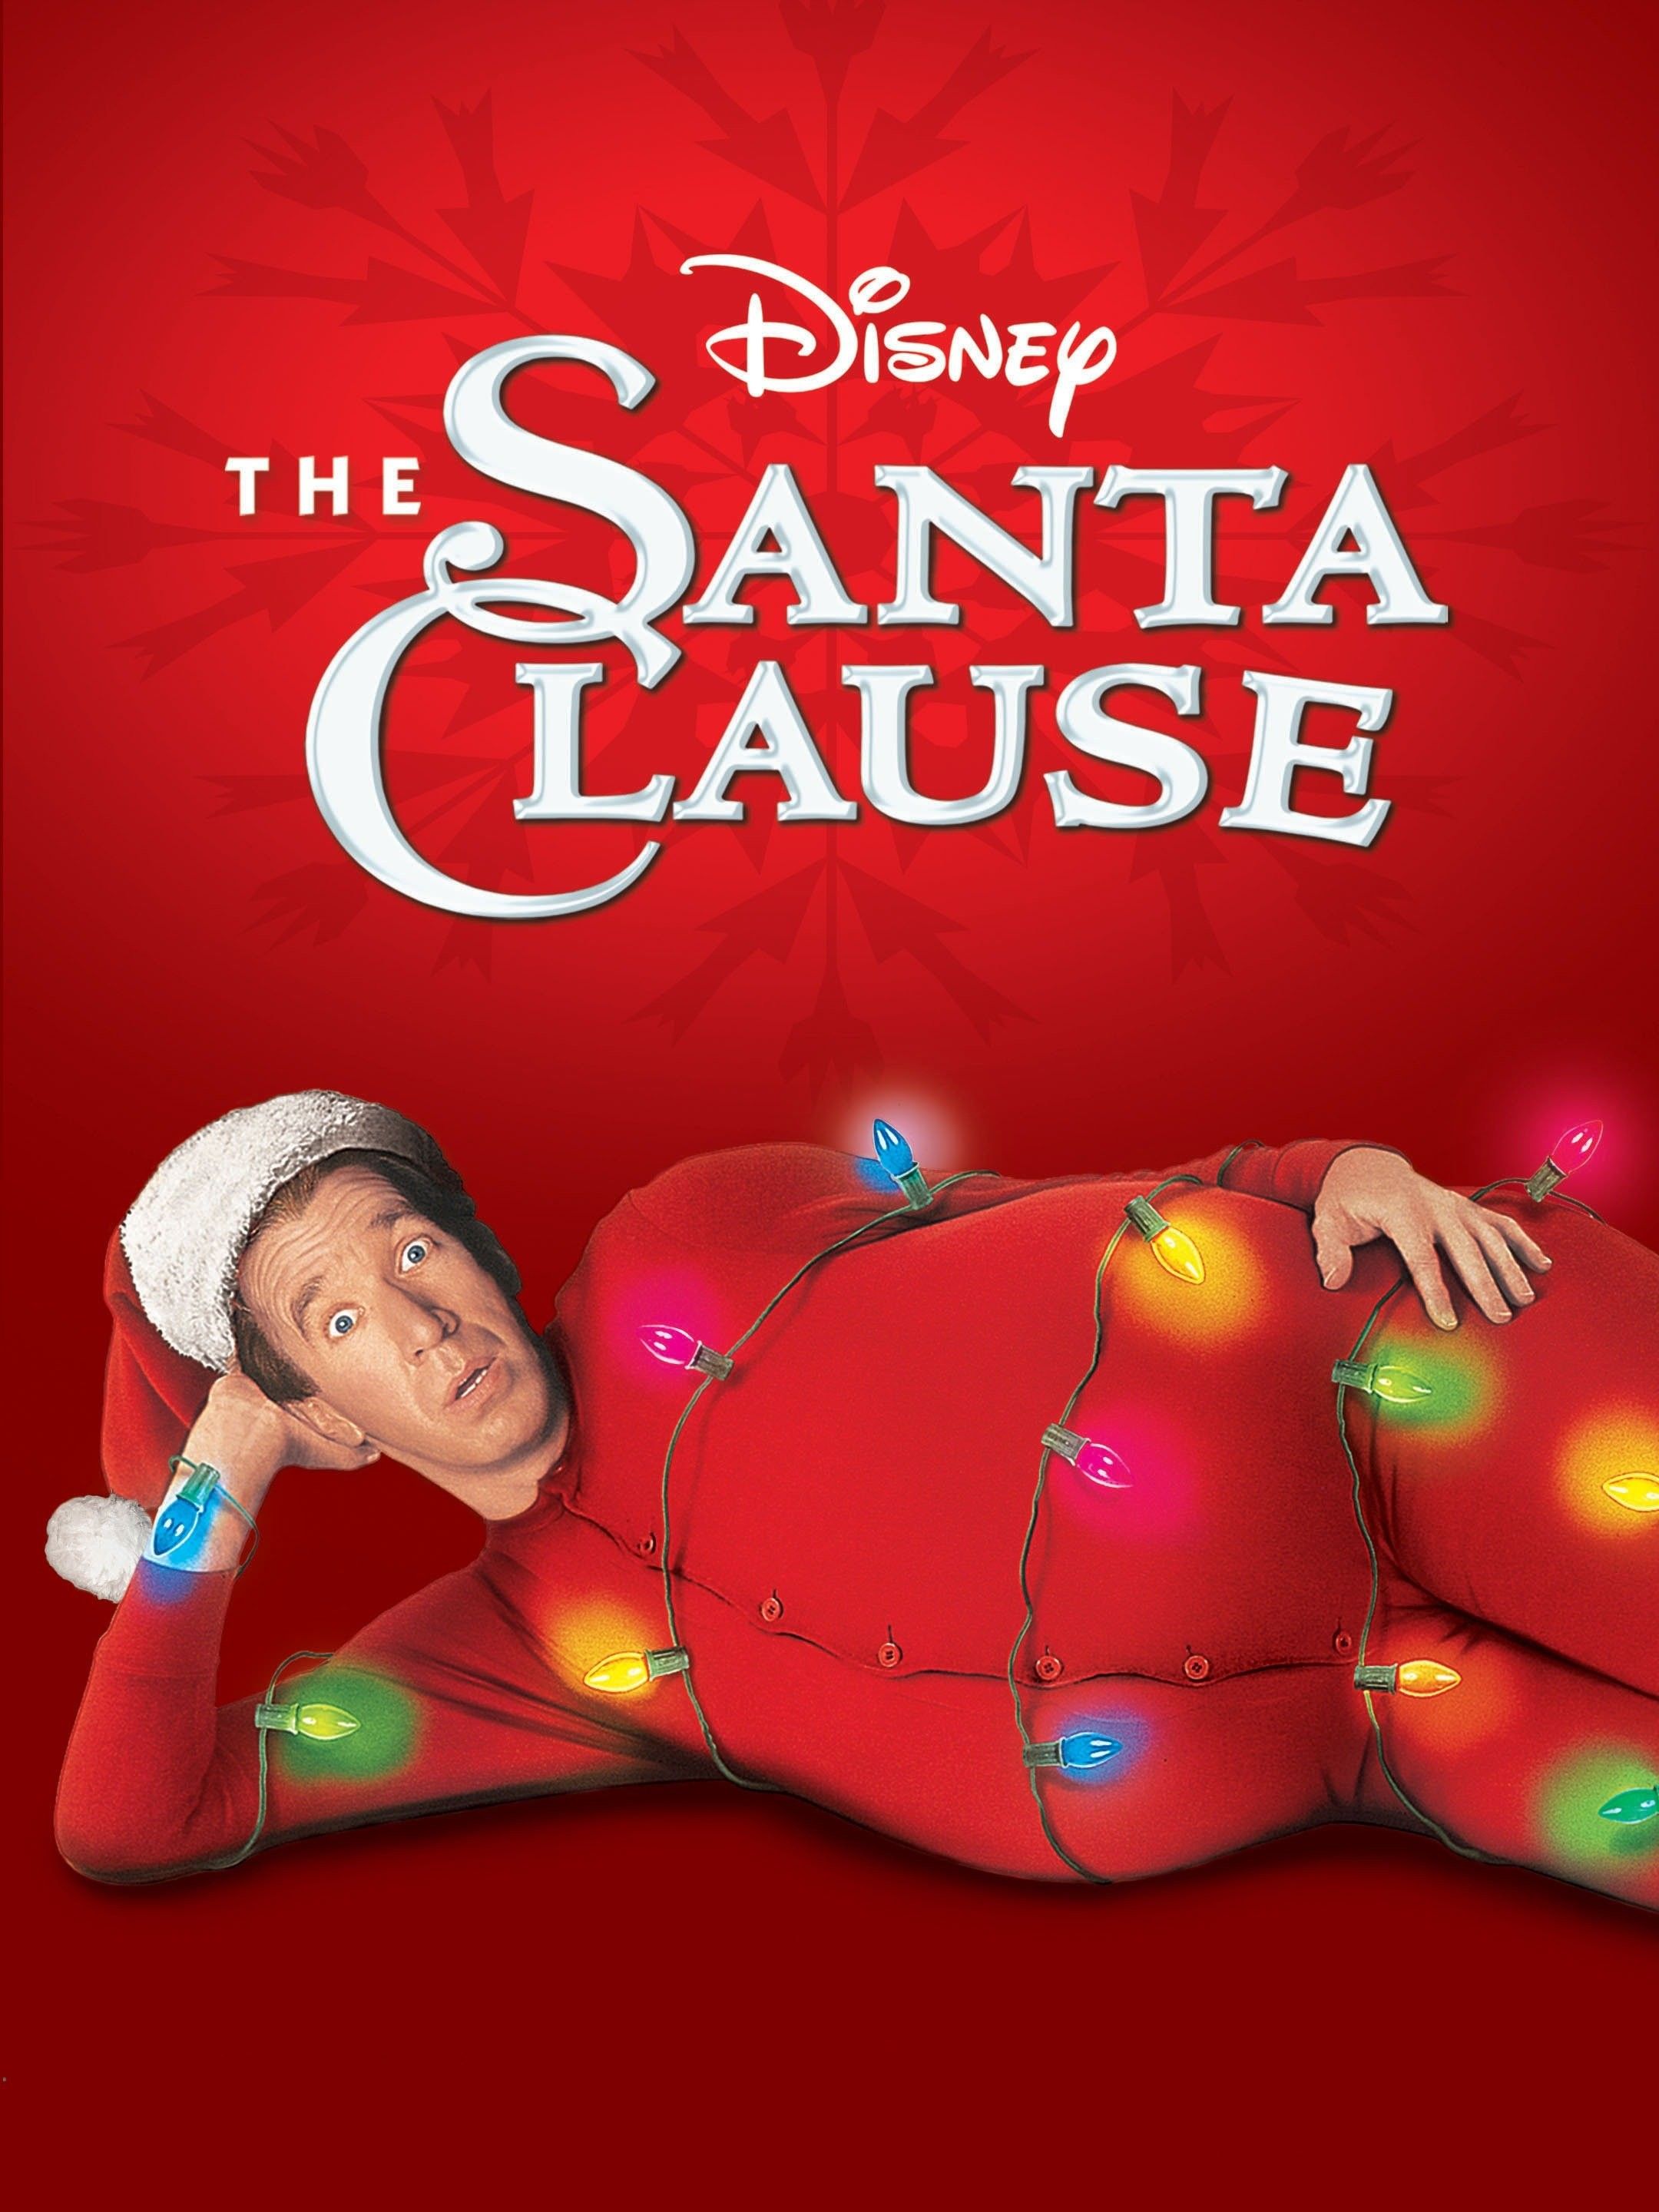 Tim Allen as Santa Claus in The Santa Clause movie poster